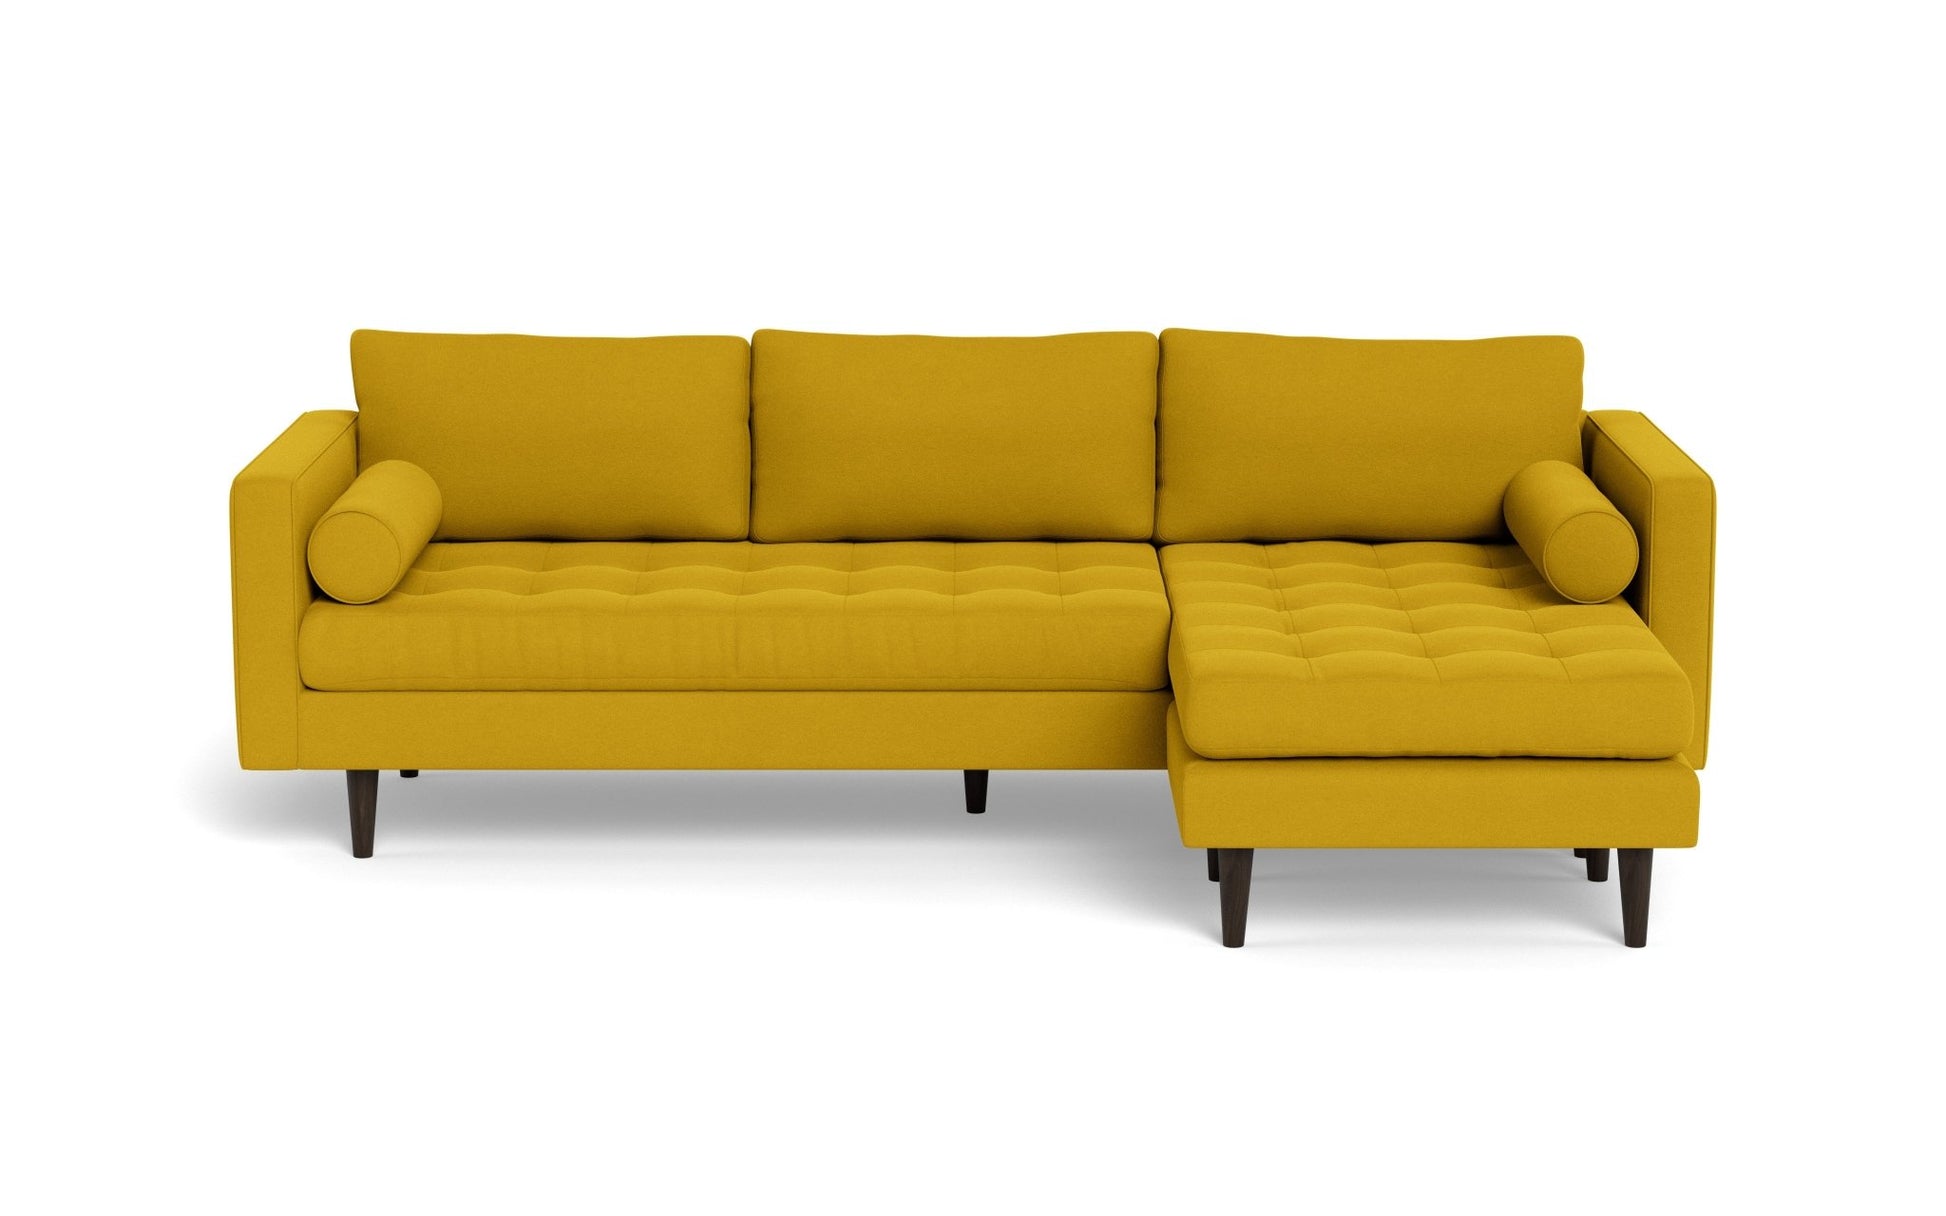 Ladybird Reversible Chaise Sofa - Bella Gold